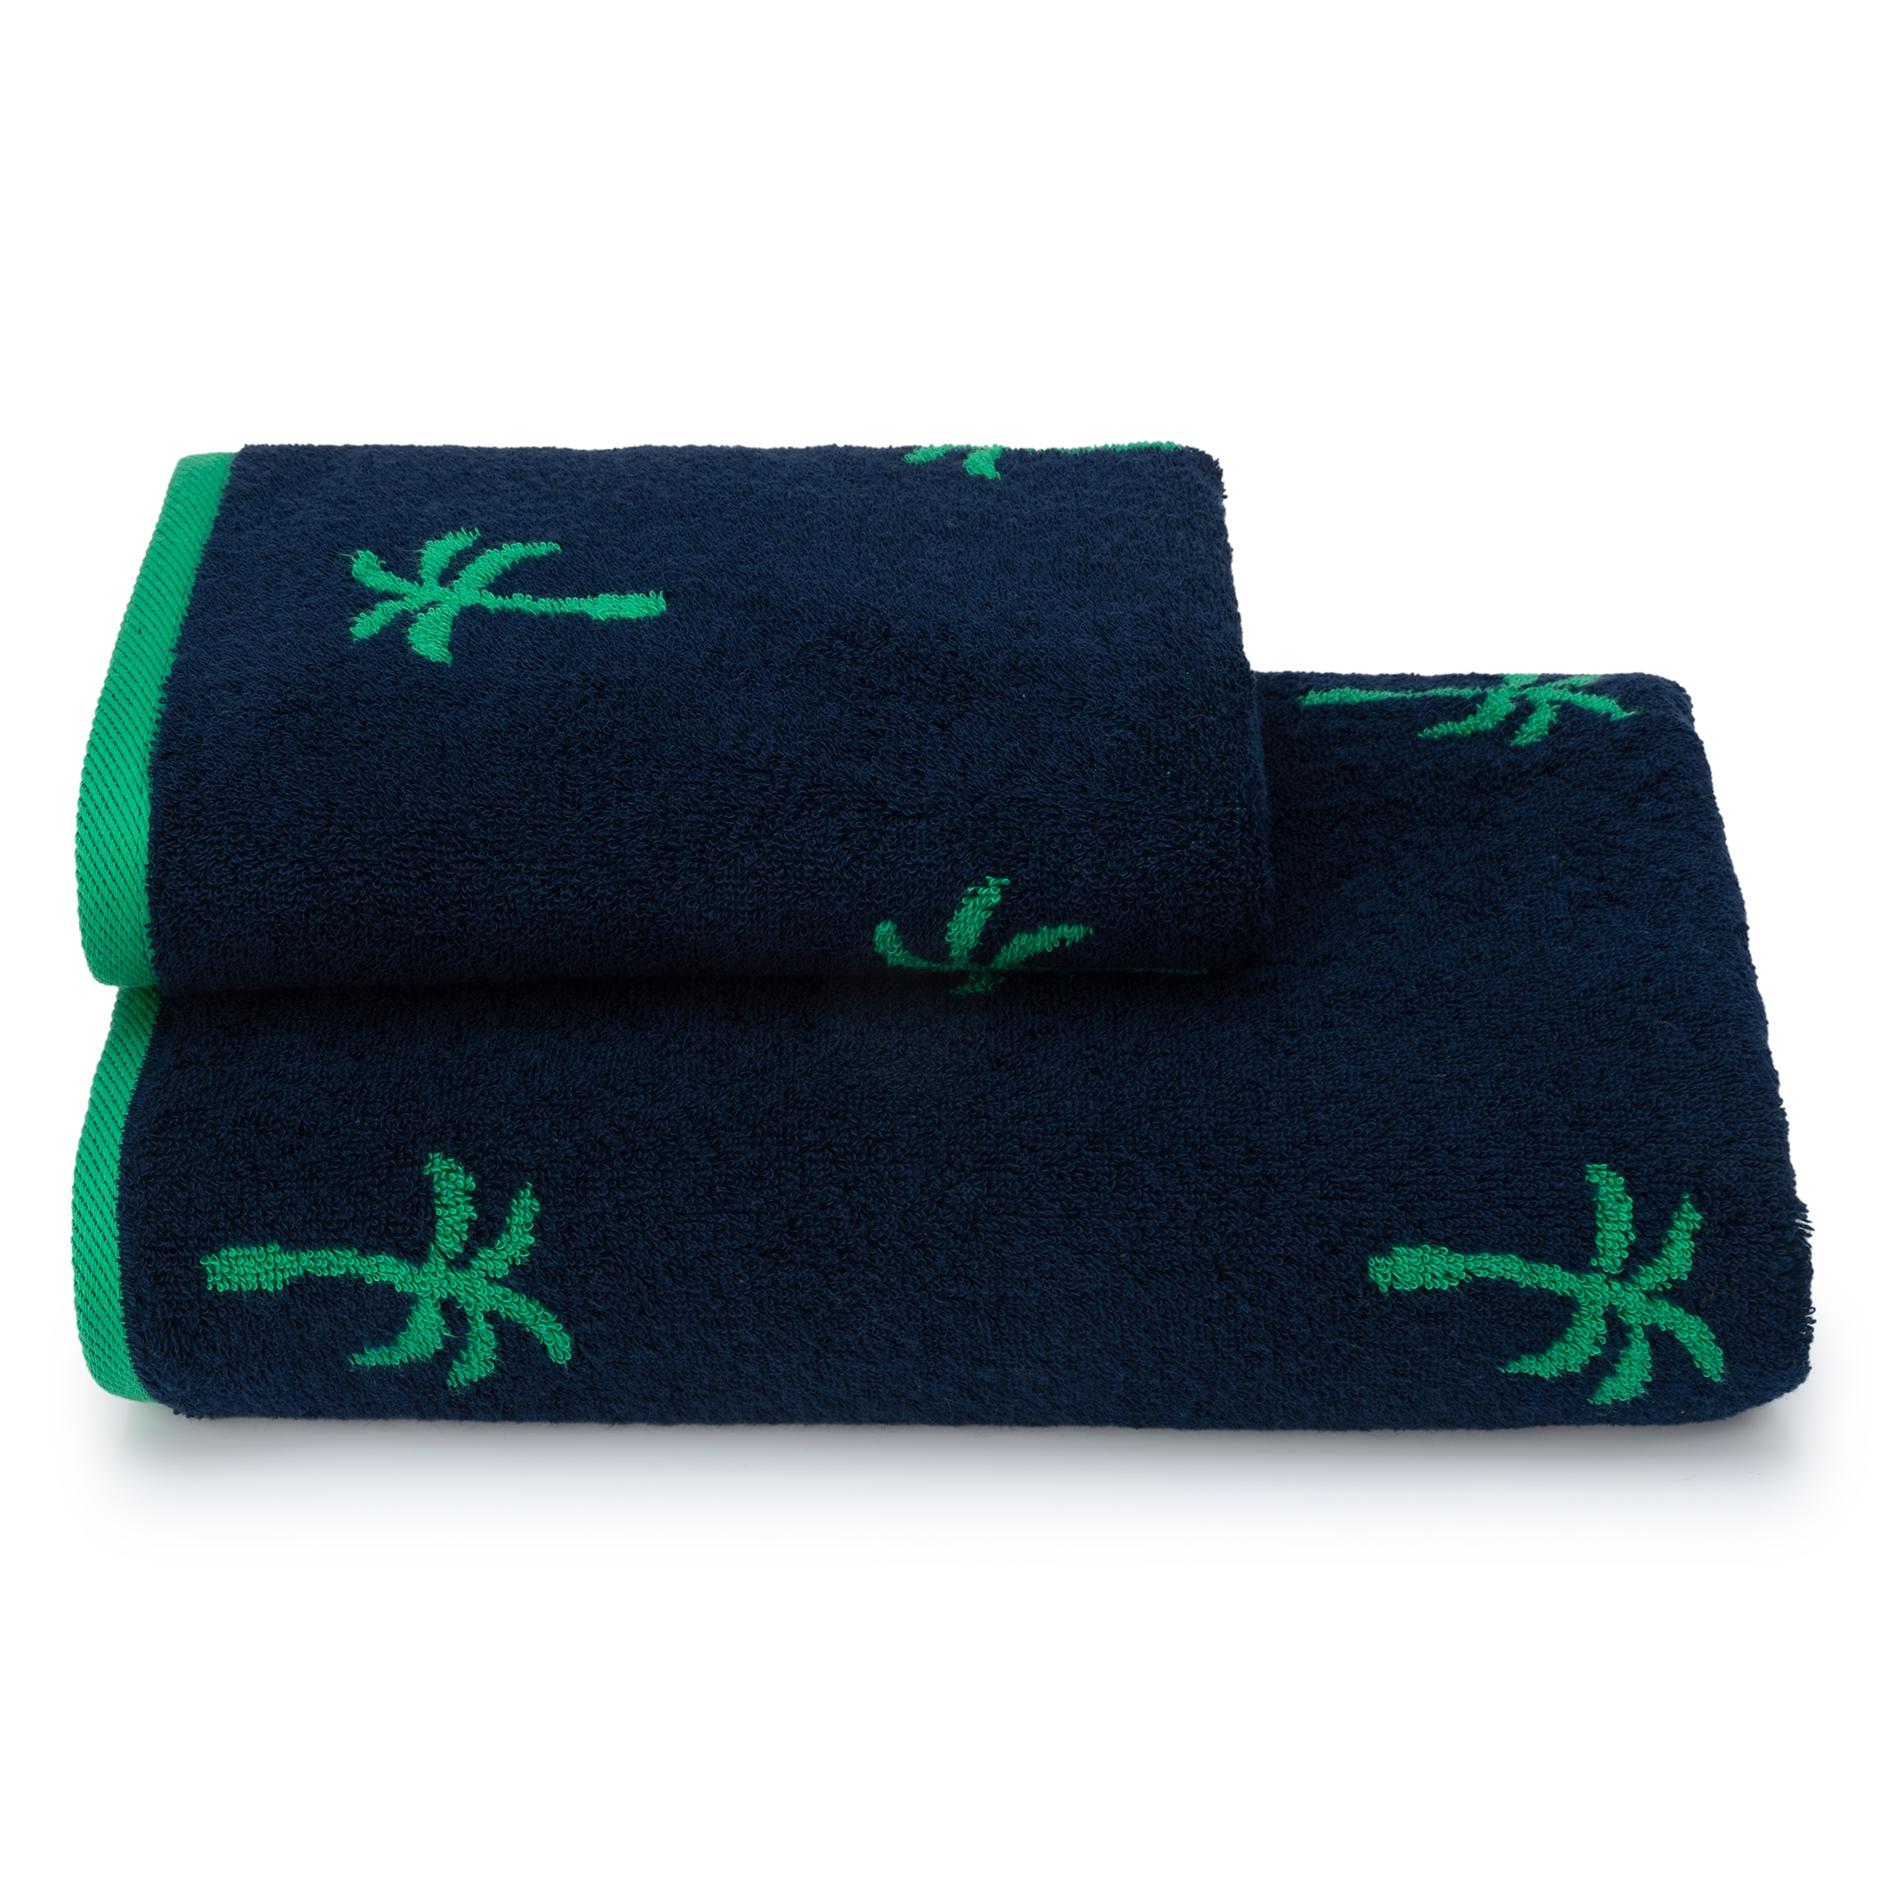 Махровое полотенце Cleanelly Palme зеленое с синем 70х130 см, цвет зелёный - фото 4